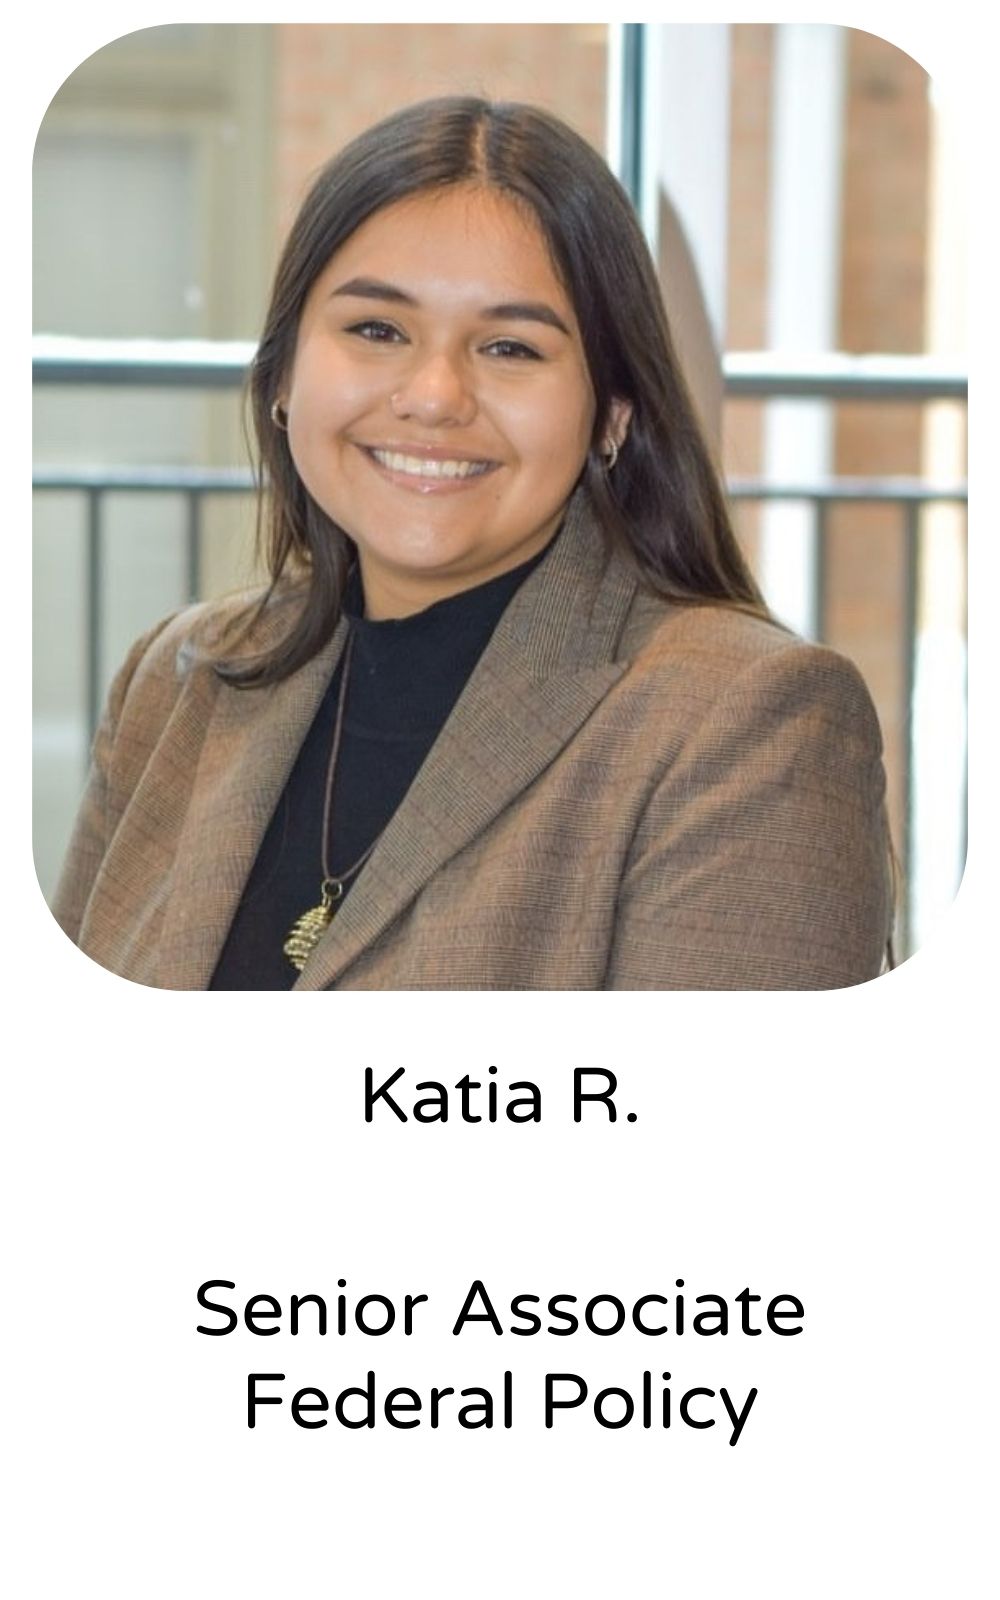 Katia R, Senior Associate, Federal Policy